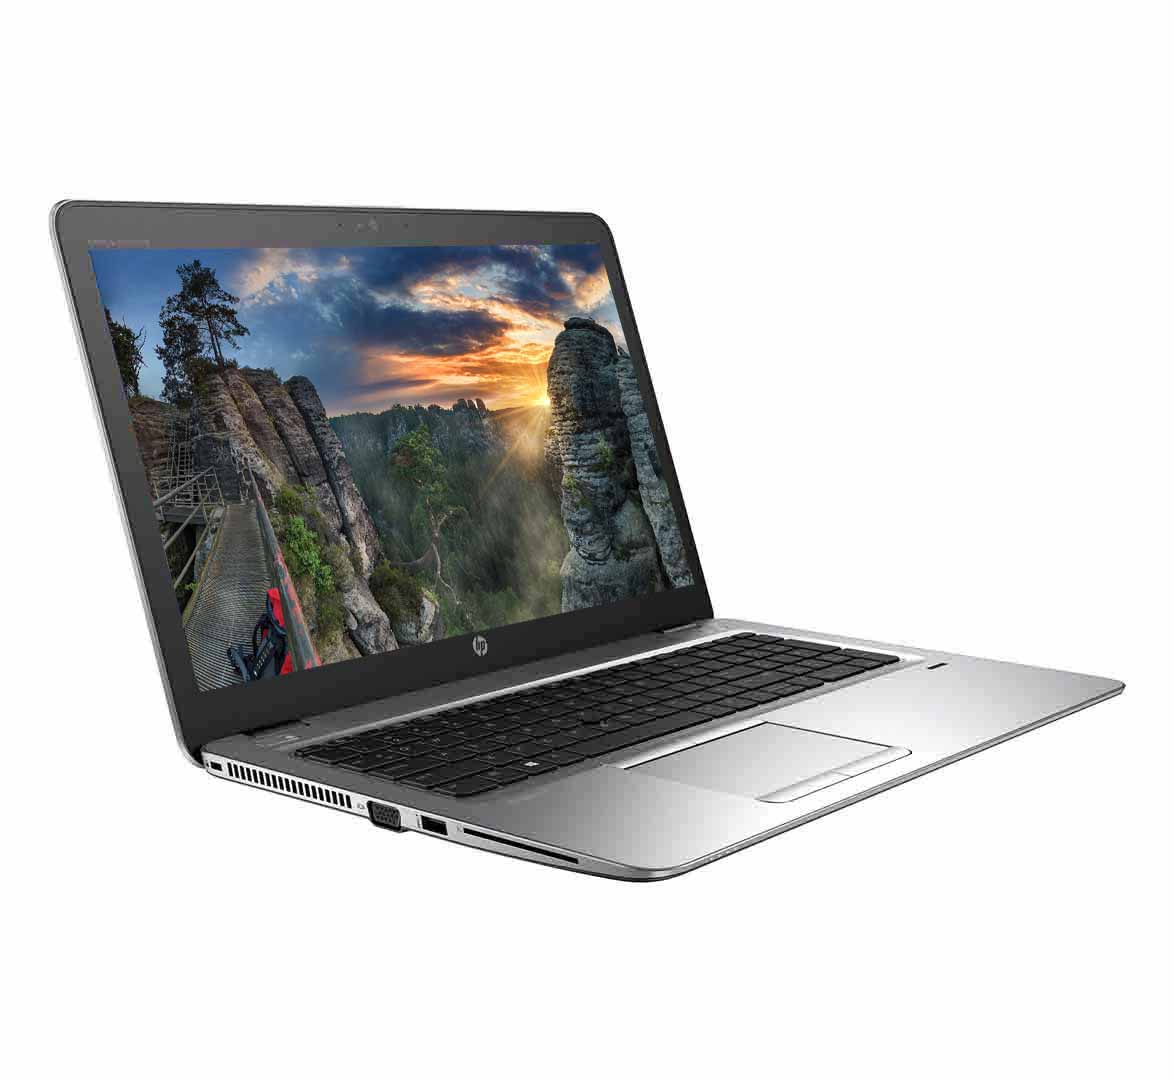 HP EliteBook 850 G3 Business Laptop, Intel Core i7-6th Gen CPU, 8GB RAM, 256GB SSD, 15.6 inch Touchscreen, Windows 10 Pro, Refurbished Laptop